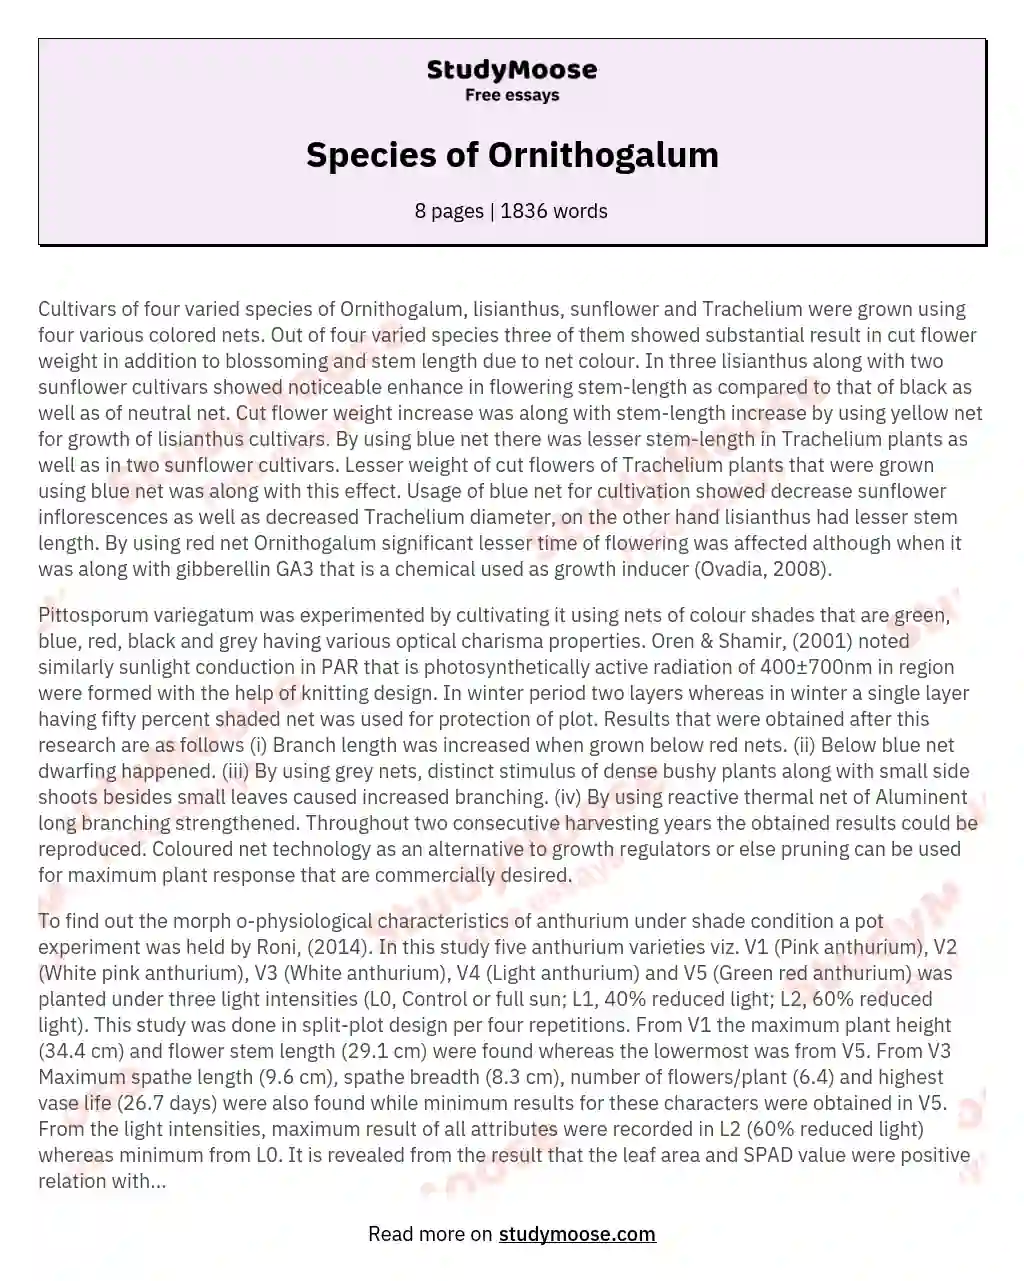 Species of Ornithogalum essay